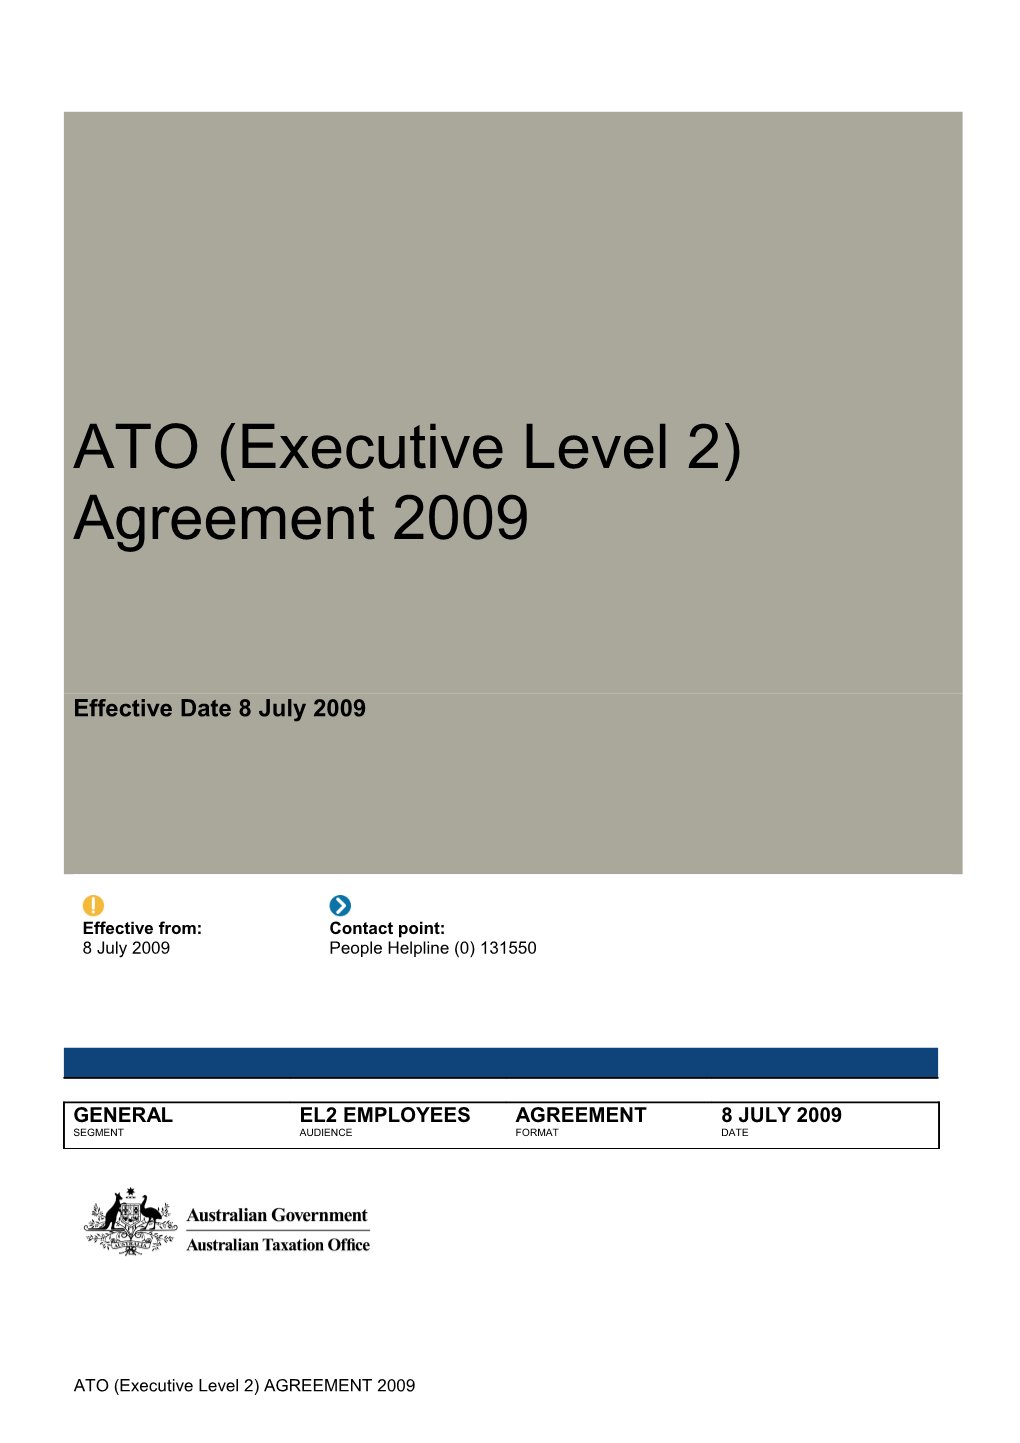 ATO (Executive Level 2) Agreement 2006